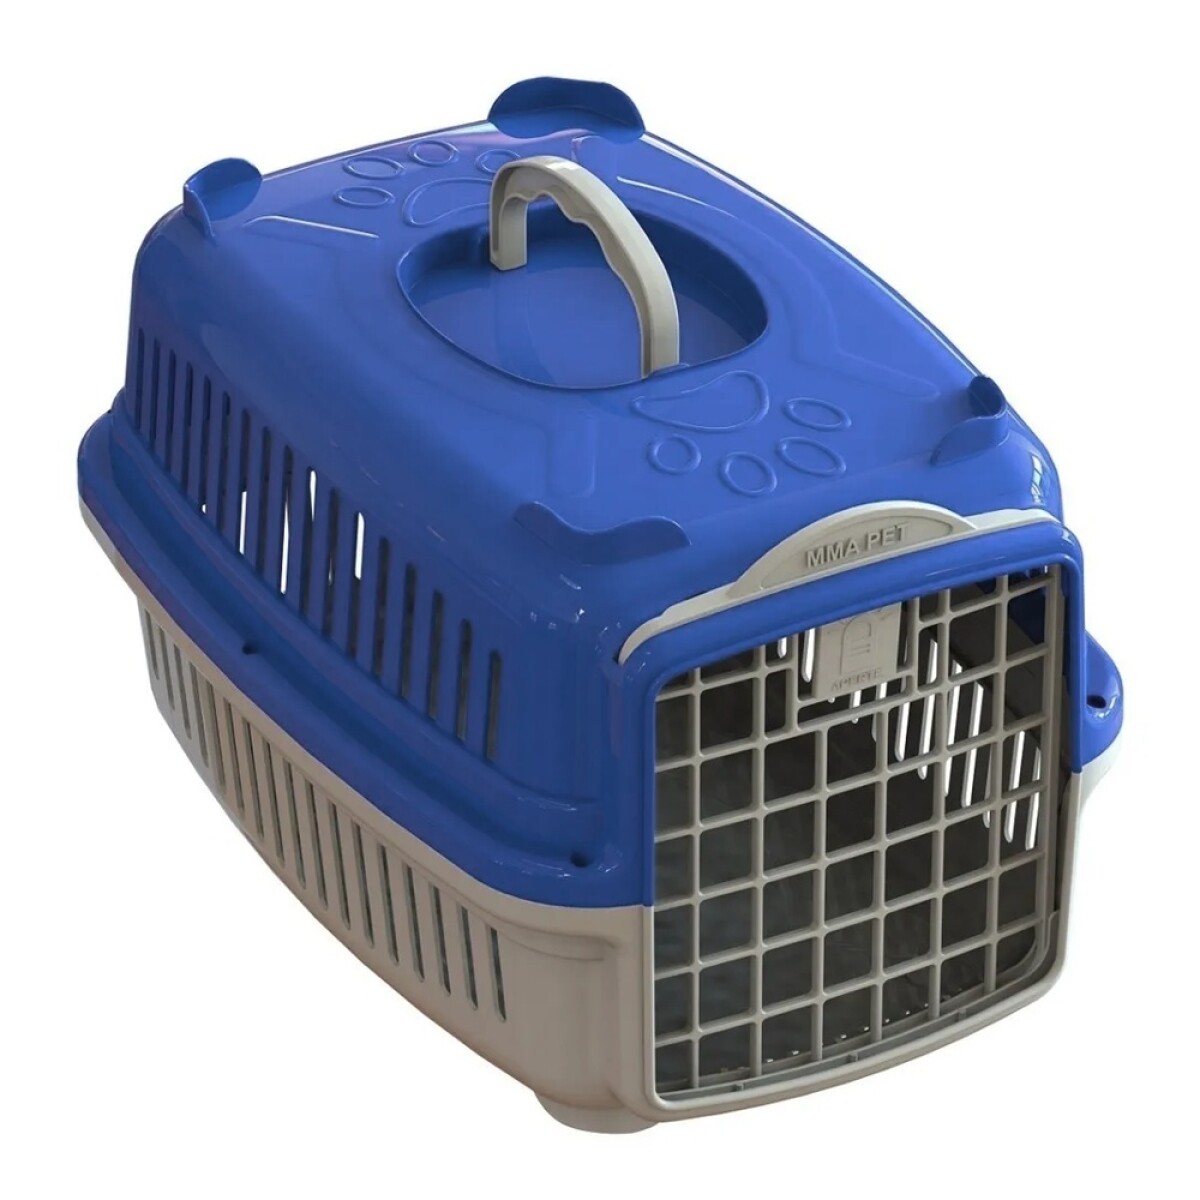 Transportadora Plástica Rígida Mascotas Pequeñas MMA PET N°2 - Azul 